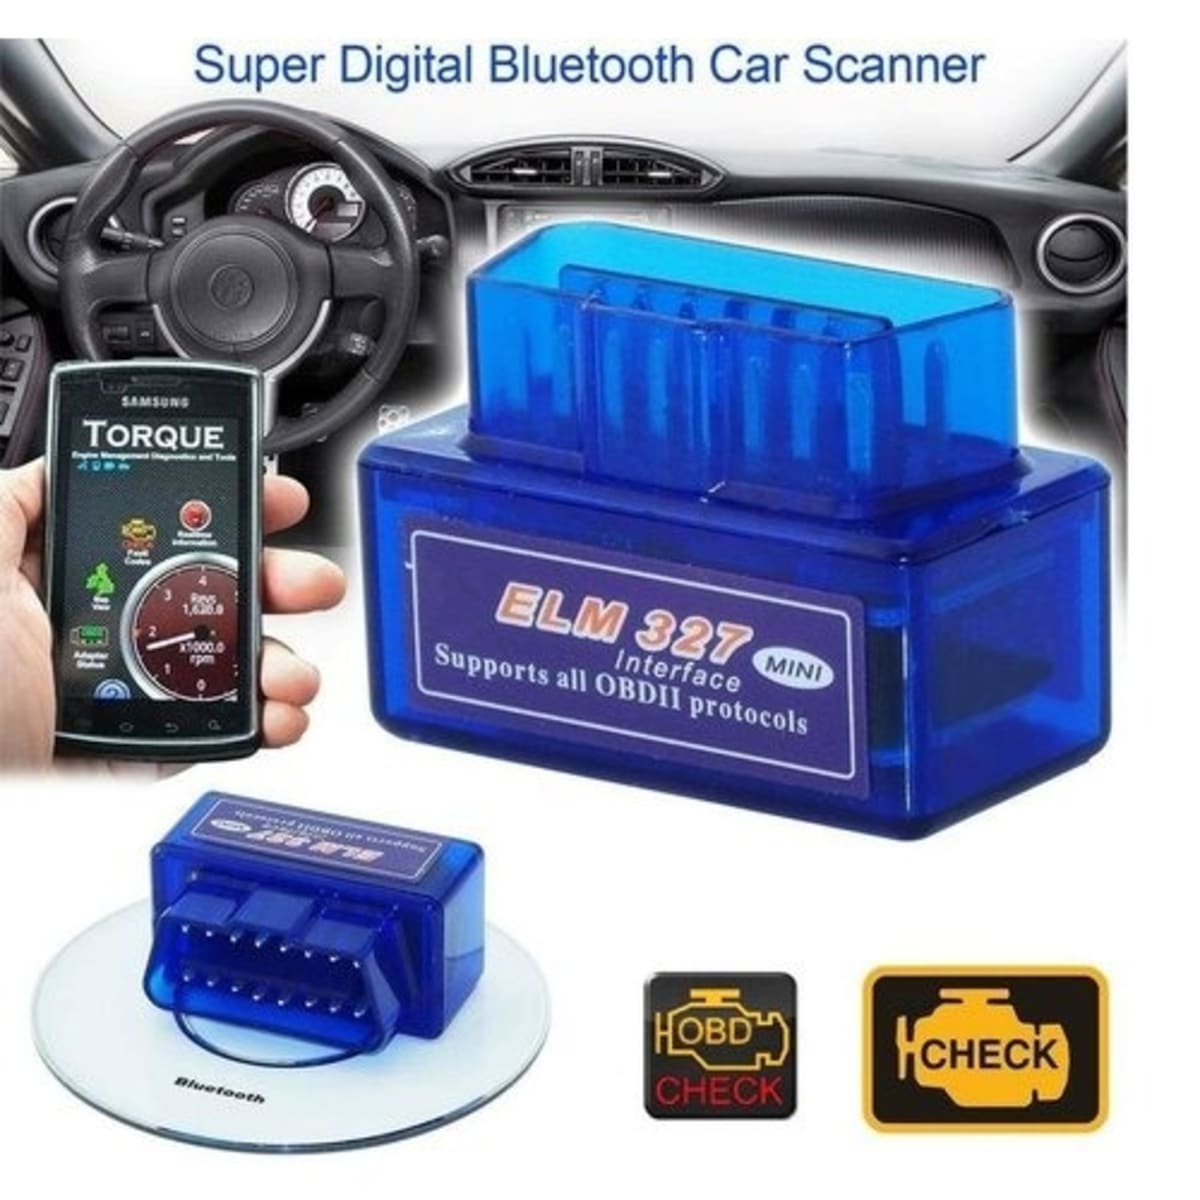 Super Mini Elm 327 Interface OBD2 Car Scanner Diagnostic Tool - Blue